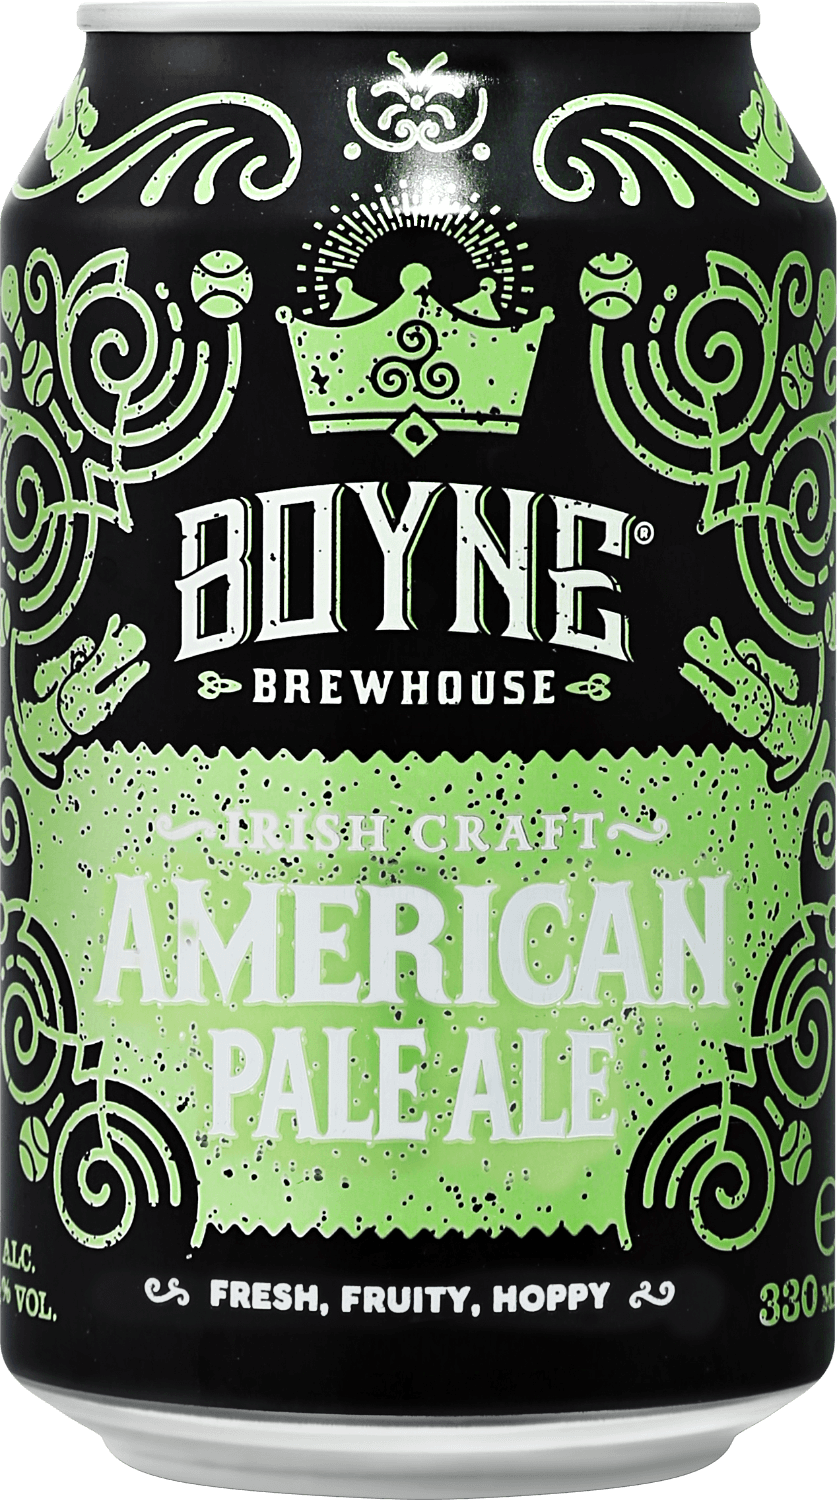 Boyne Irish Craft American Pale Ale